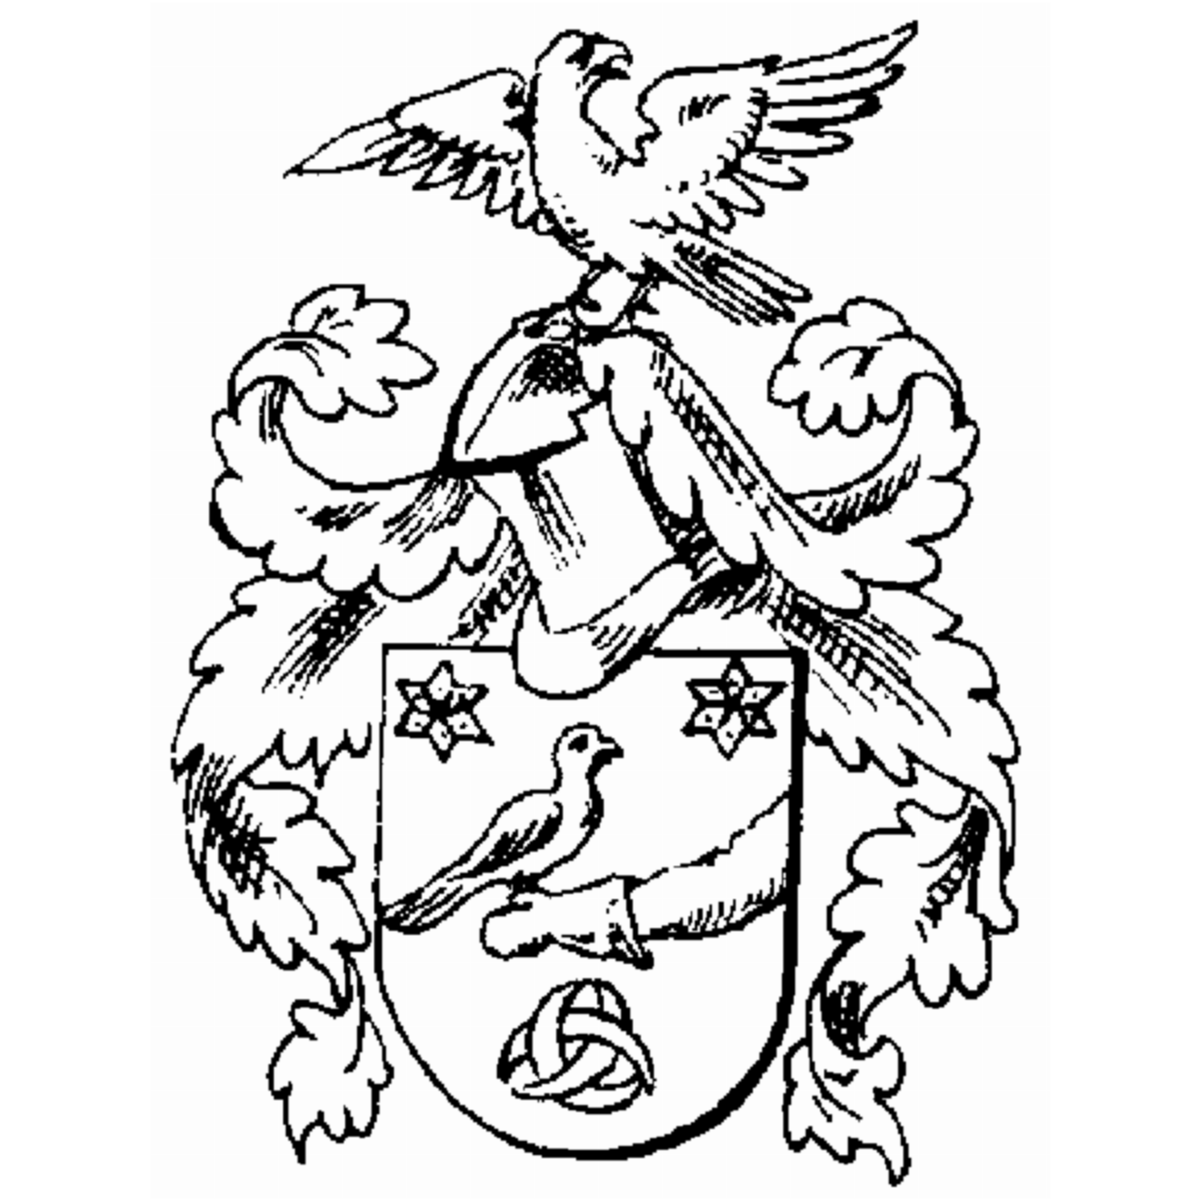 Wappen der Familie Setteler